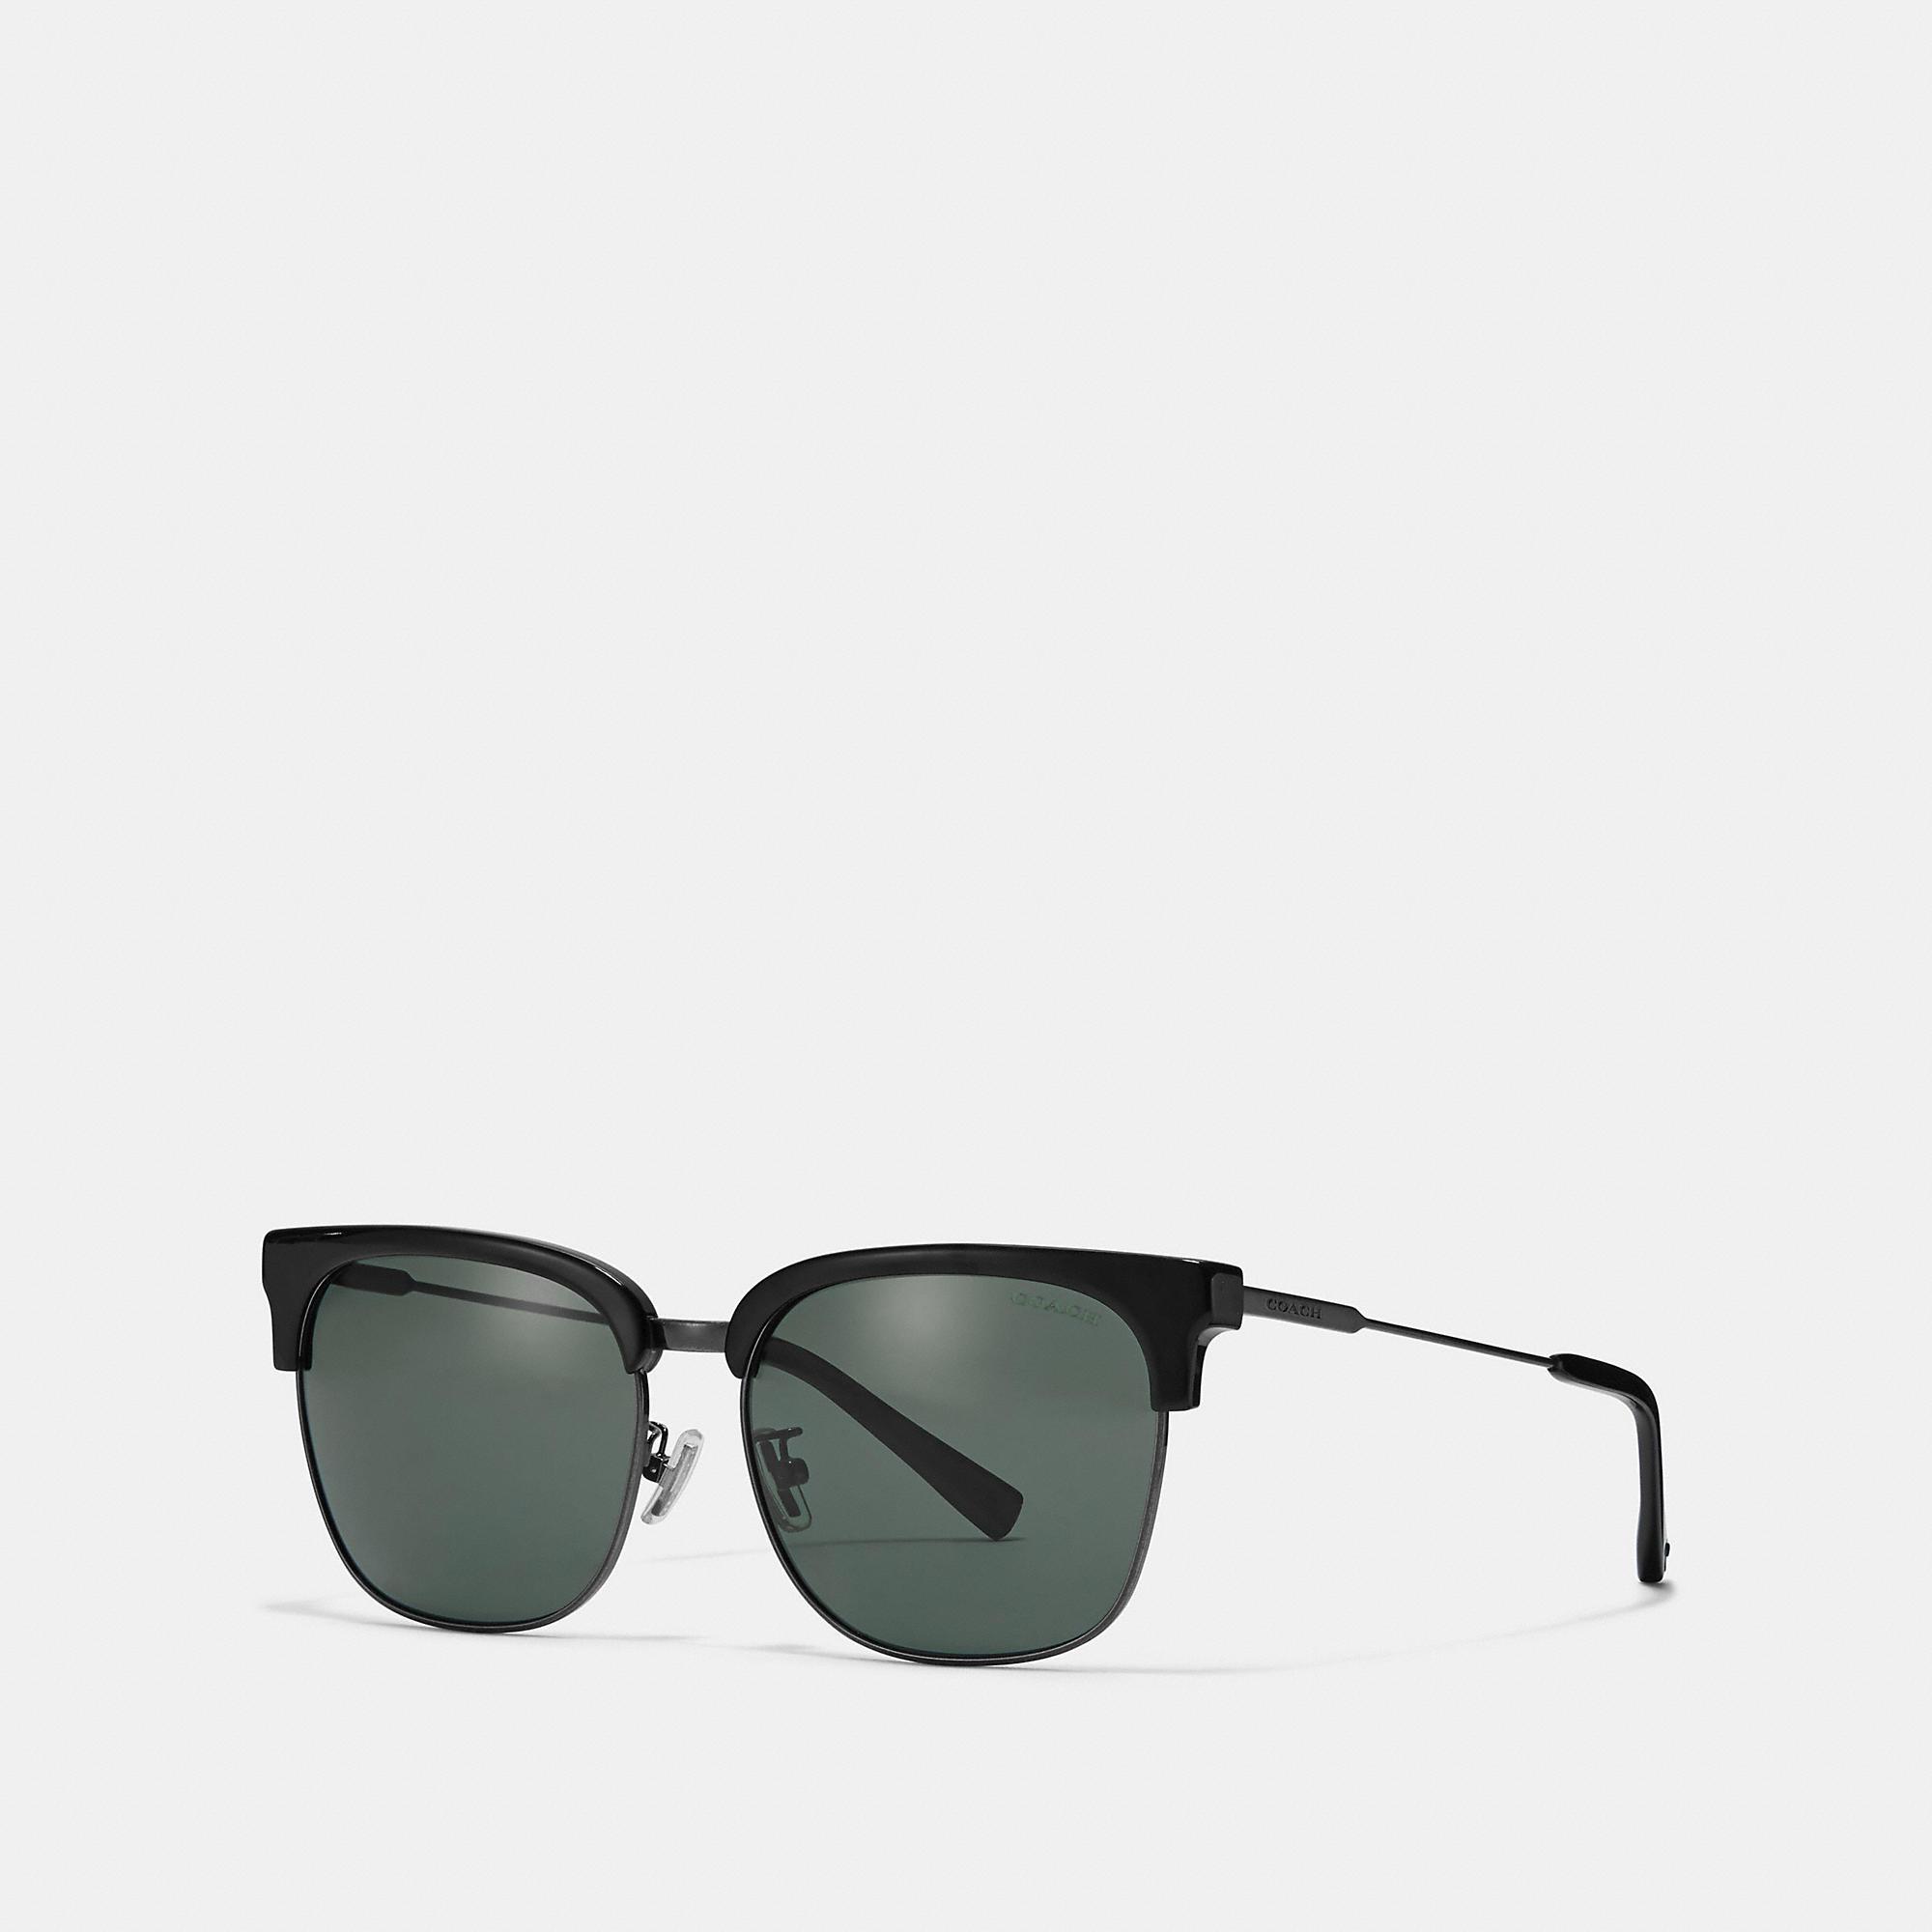 COACH Retro Frame Sunglasses in Black for Men - Lyst